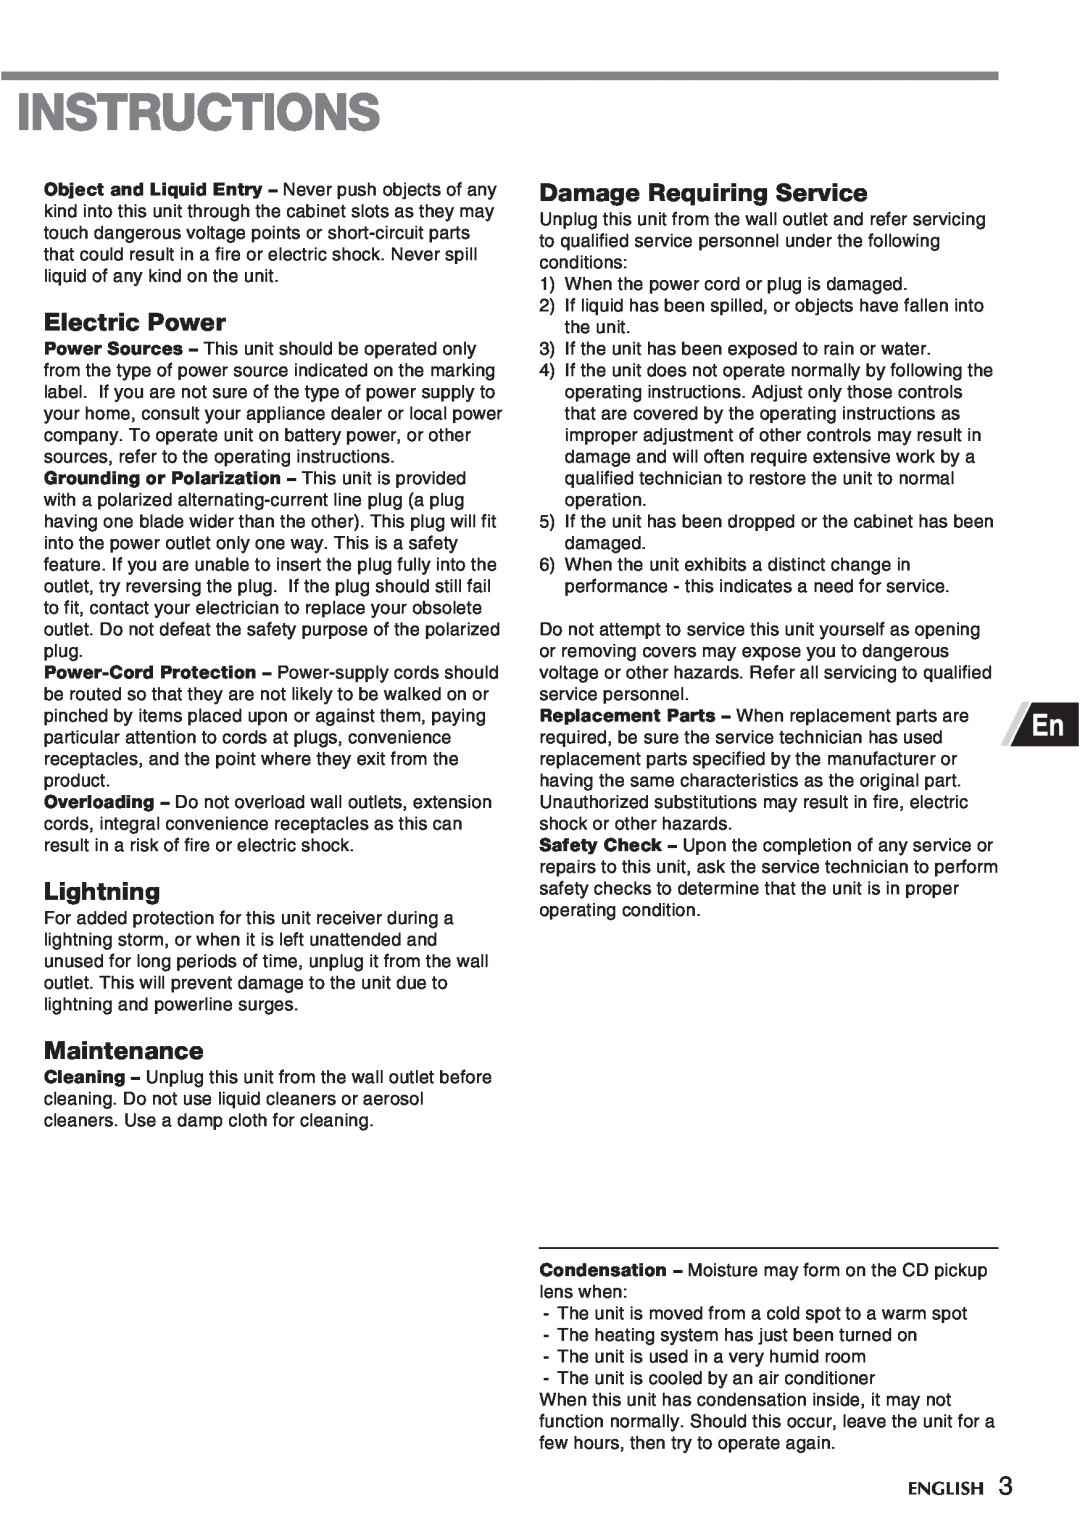 Sony CSD-TD10, CSD-TD30 manual Electric Power, Lightning, Damage Requiring Service, Maintenance, English, Instructions 